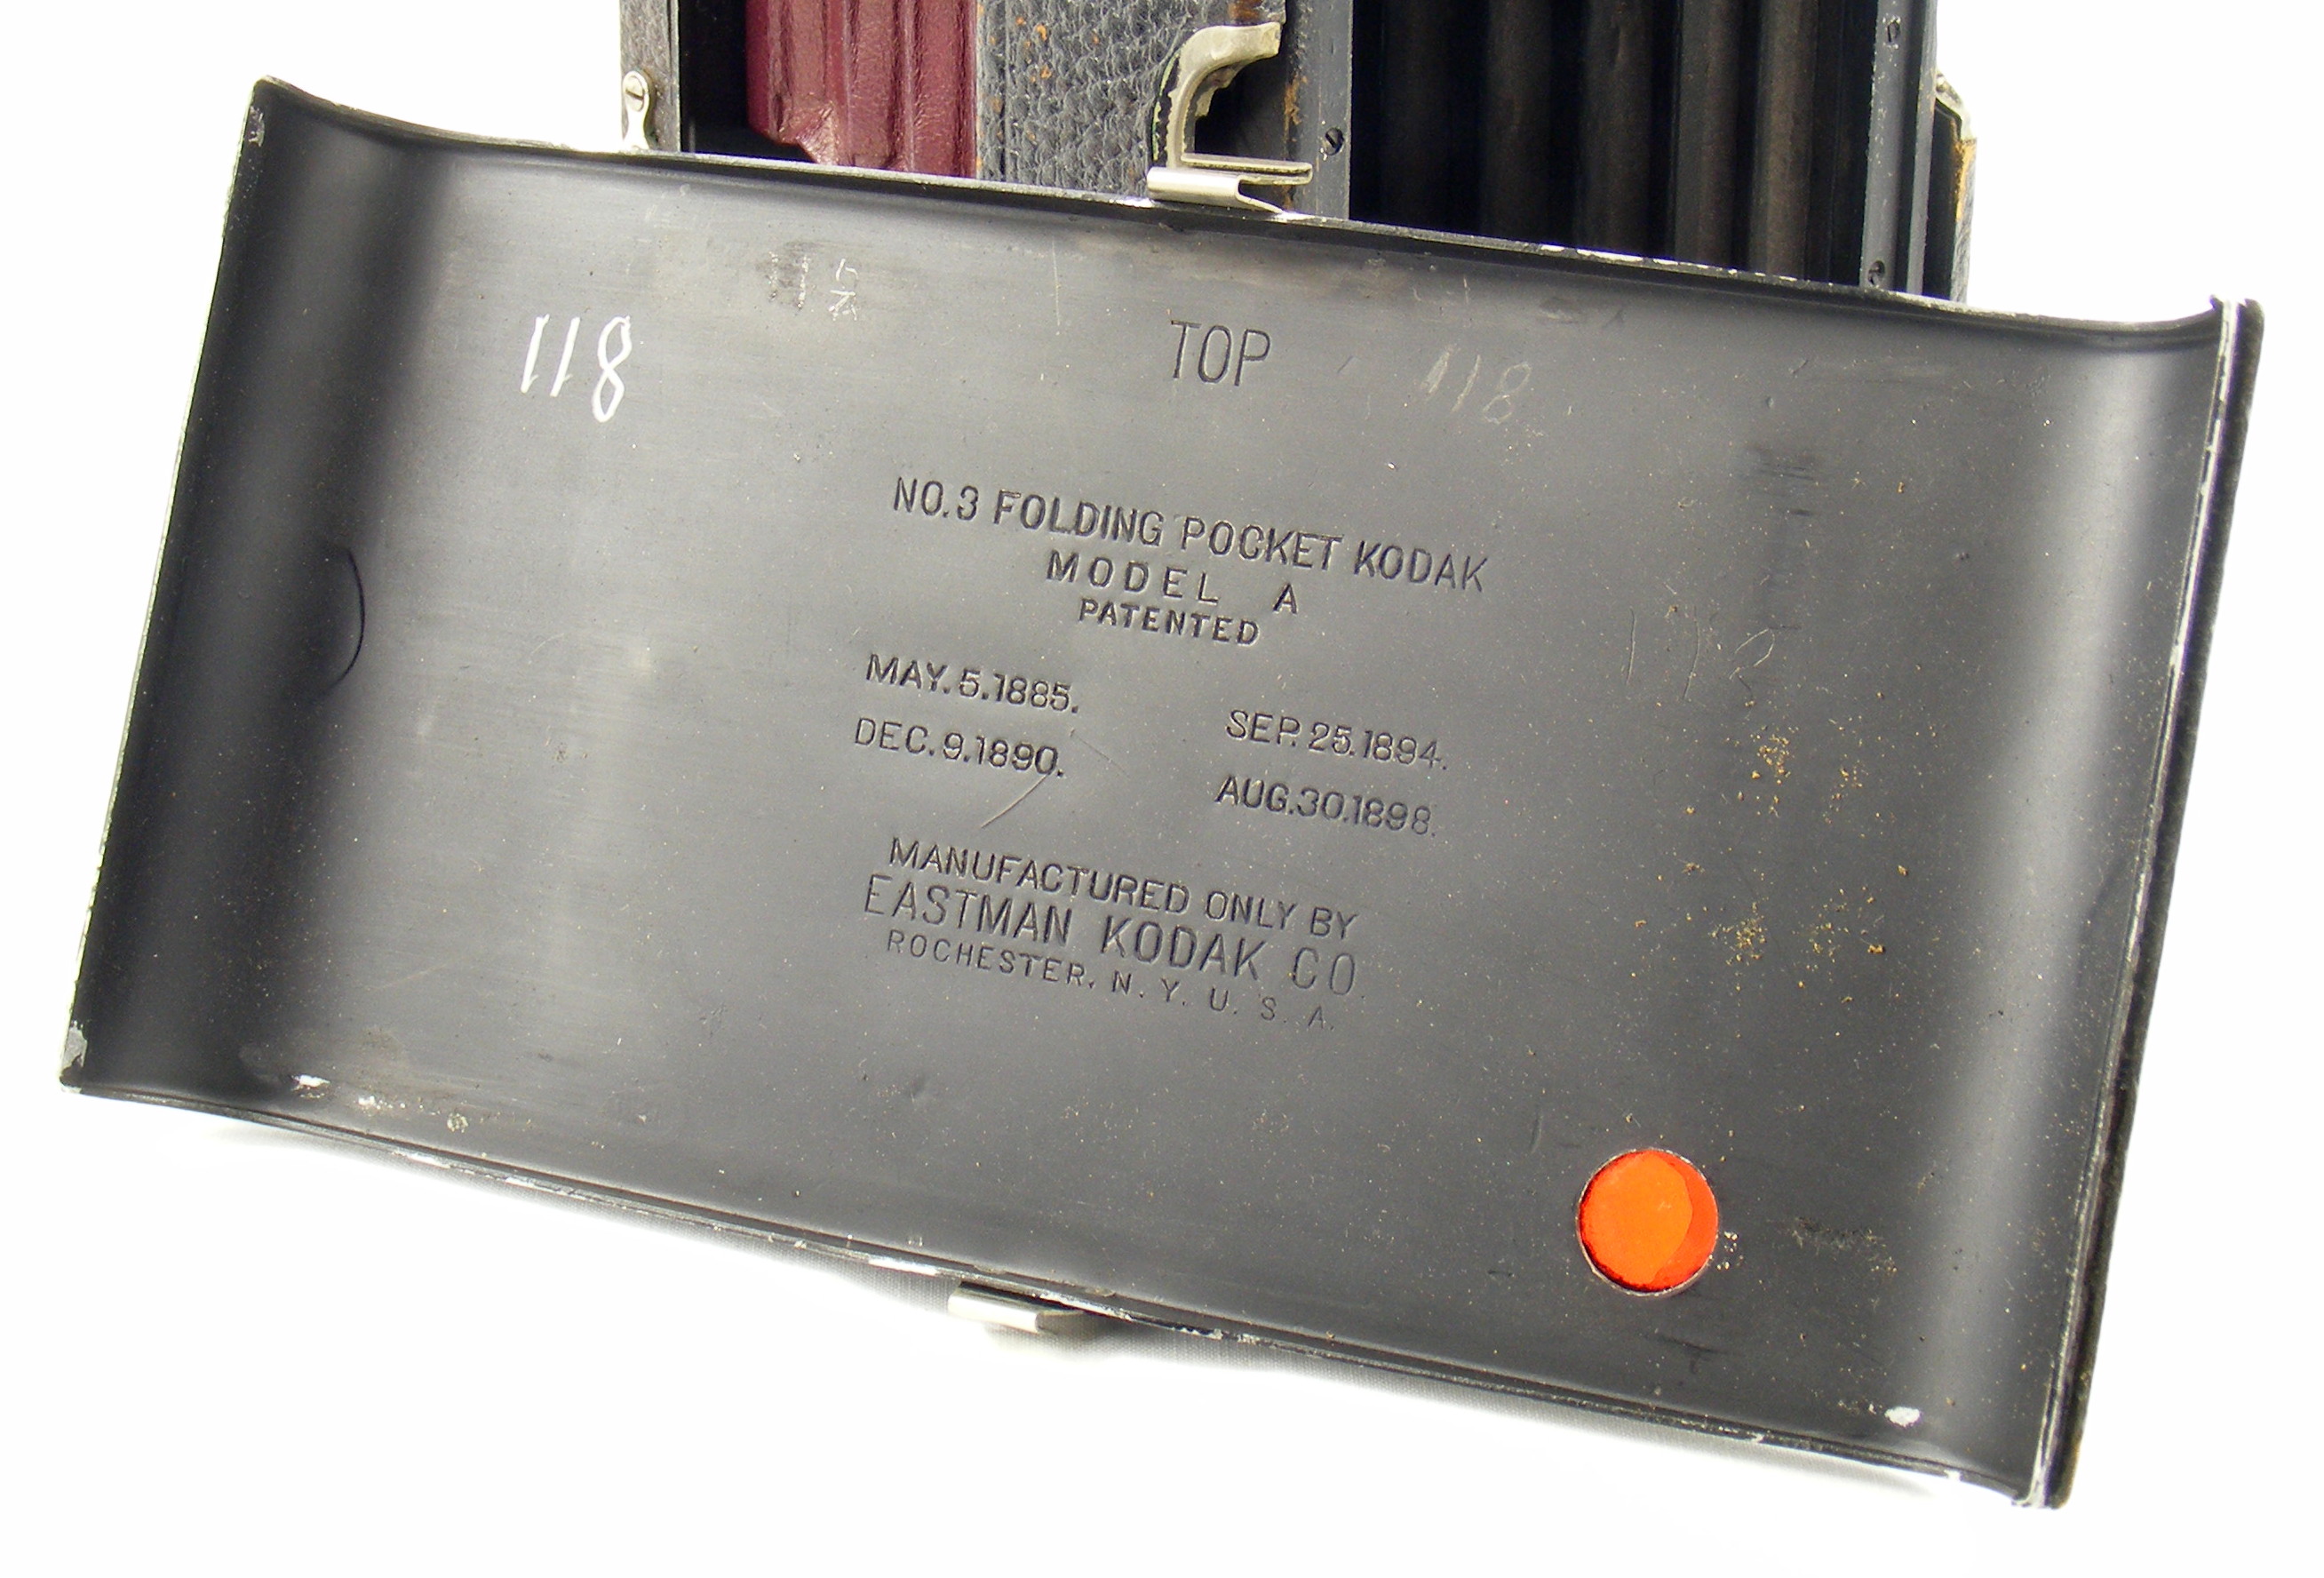 Image of No 3 Folding Pocket Kodak (rear panel)